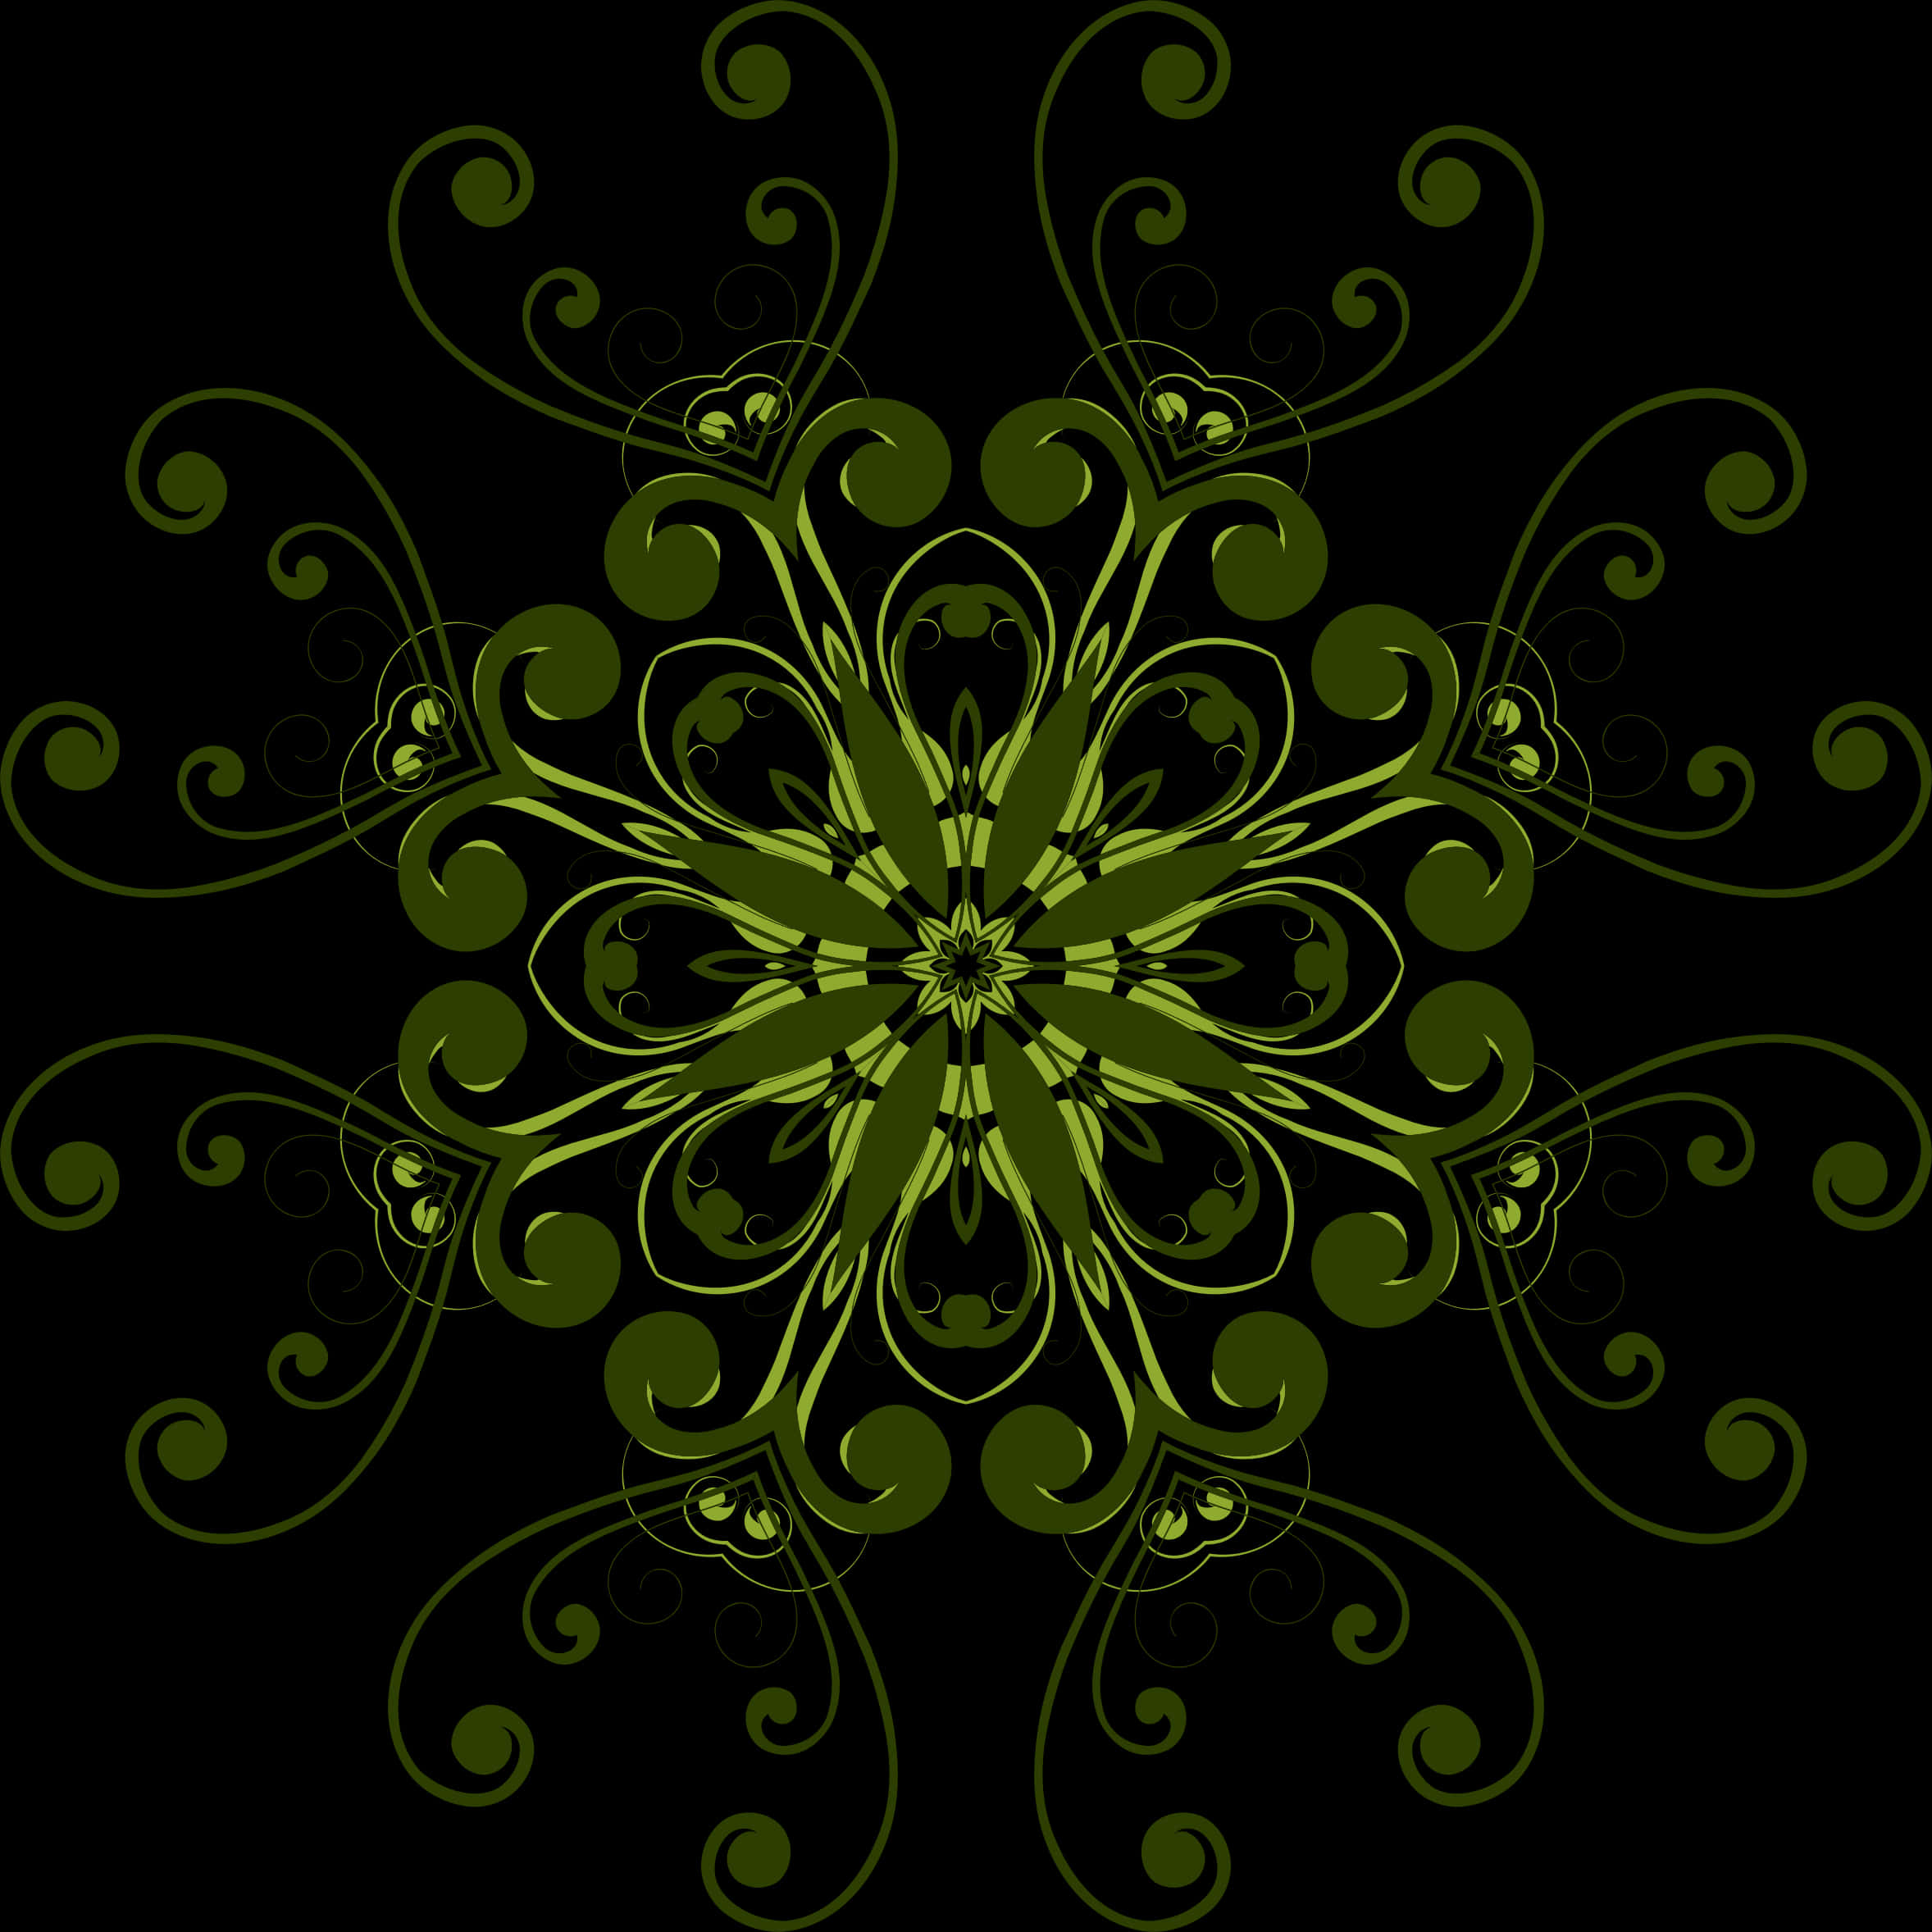 A Green And Black Circular Pattern